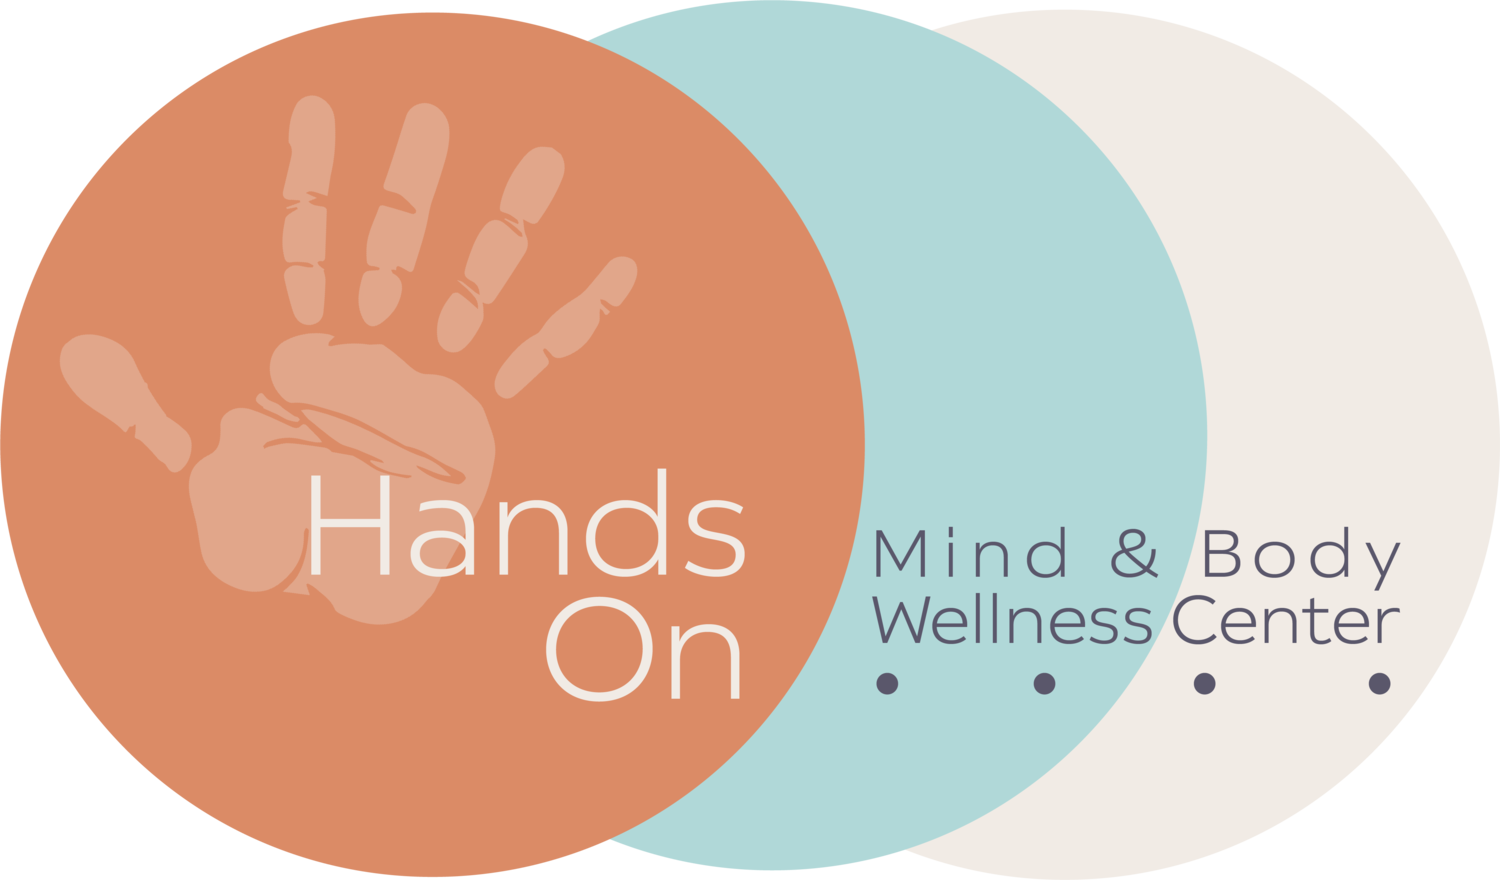 Hands On Mind &amp; Body Wellness Center